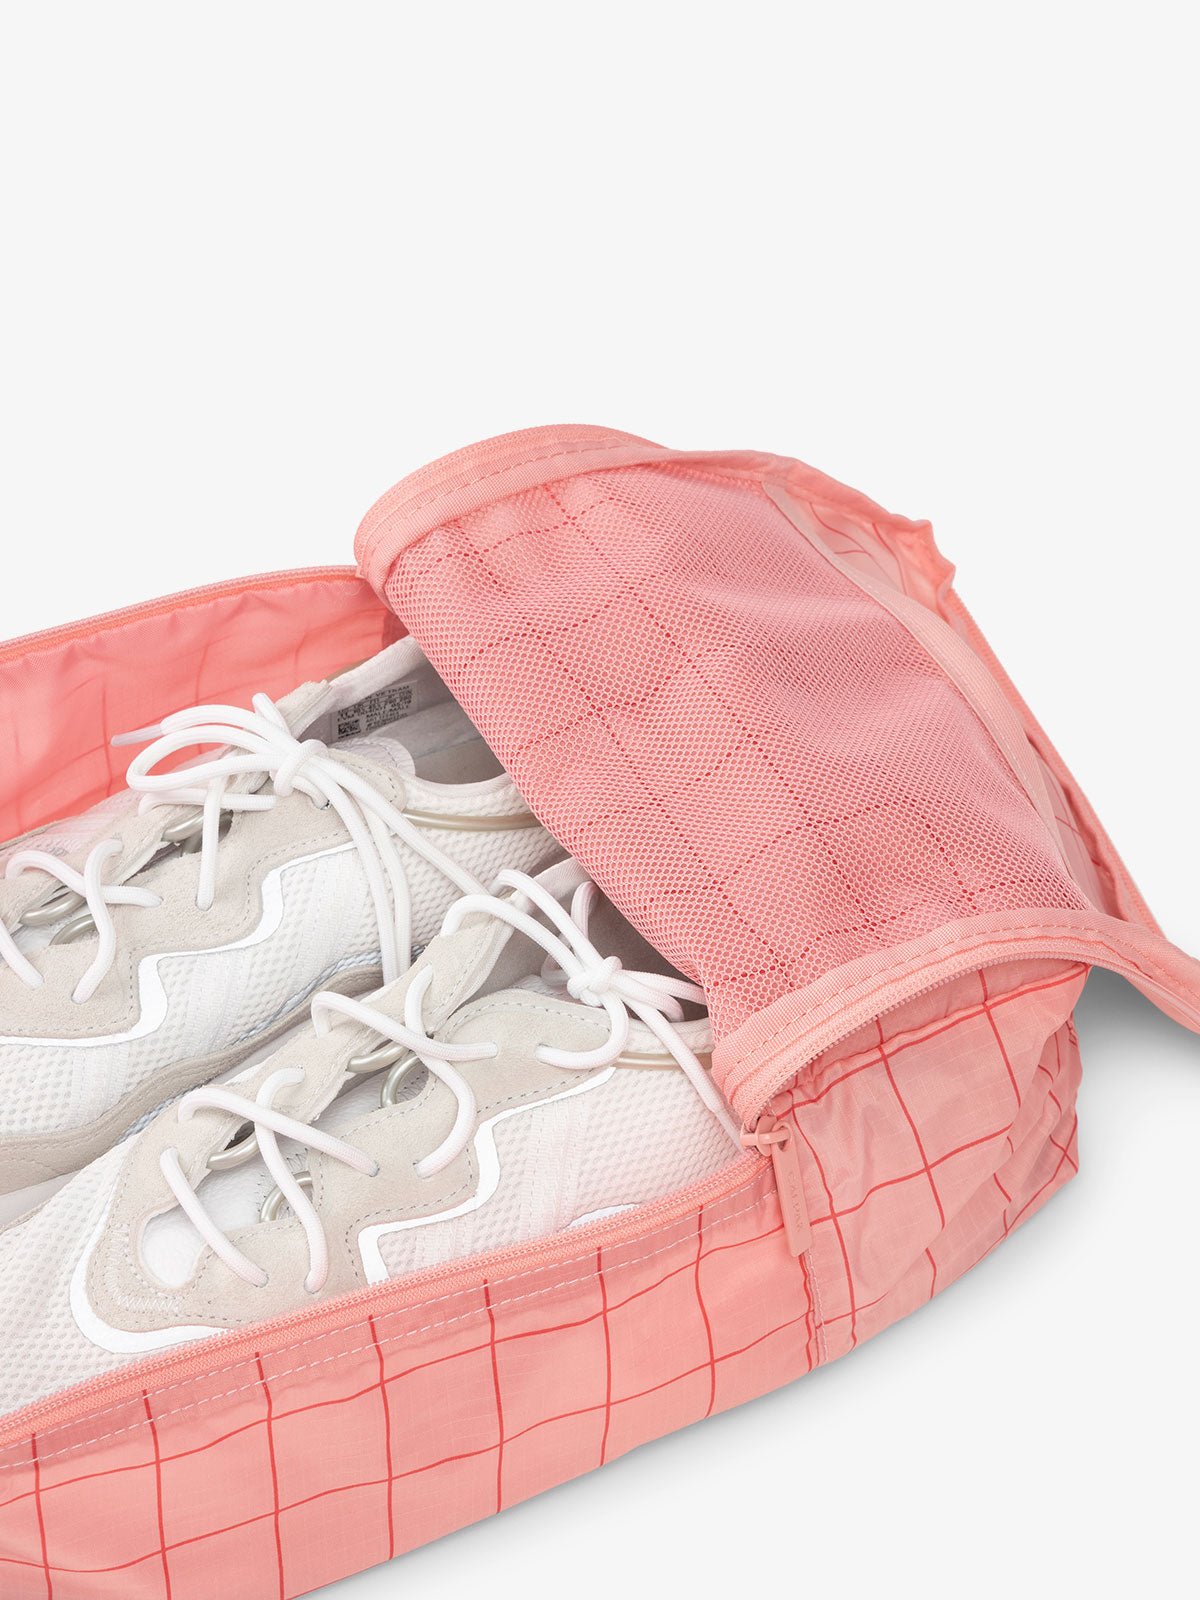 CALPAK Compakt zippered shoe travel bag with mesh pocket in pink grid print